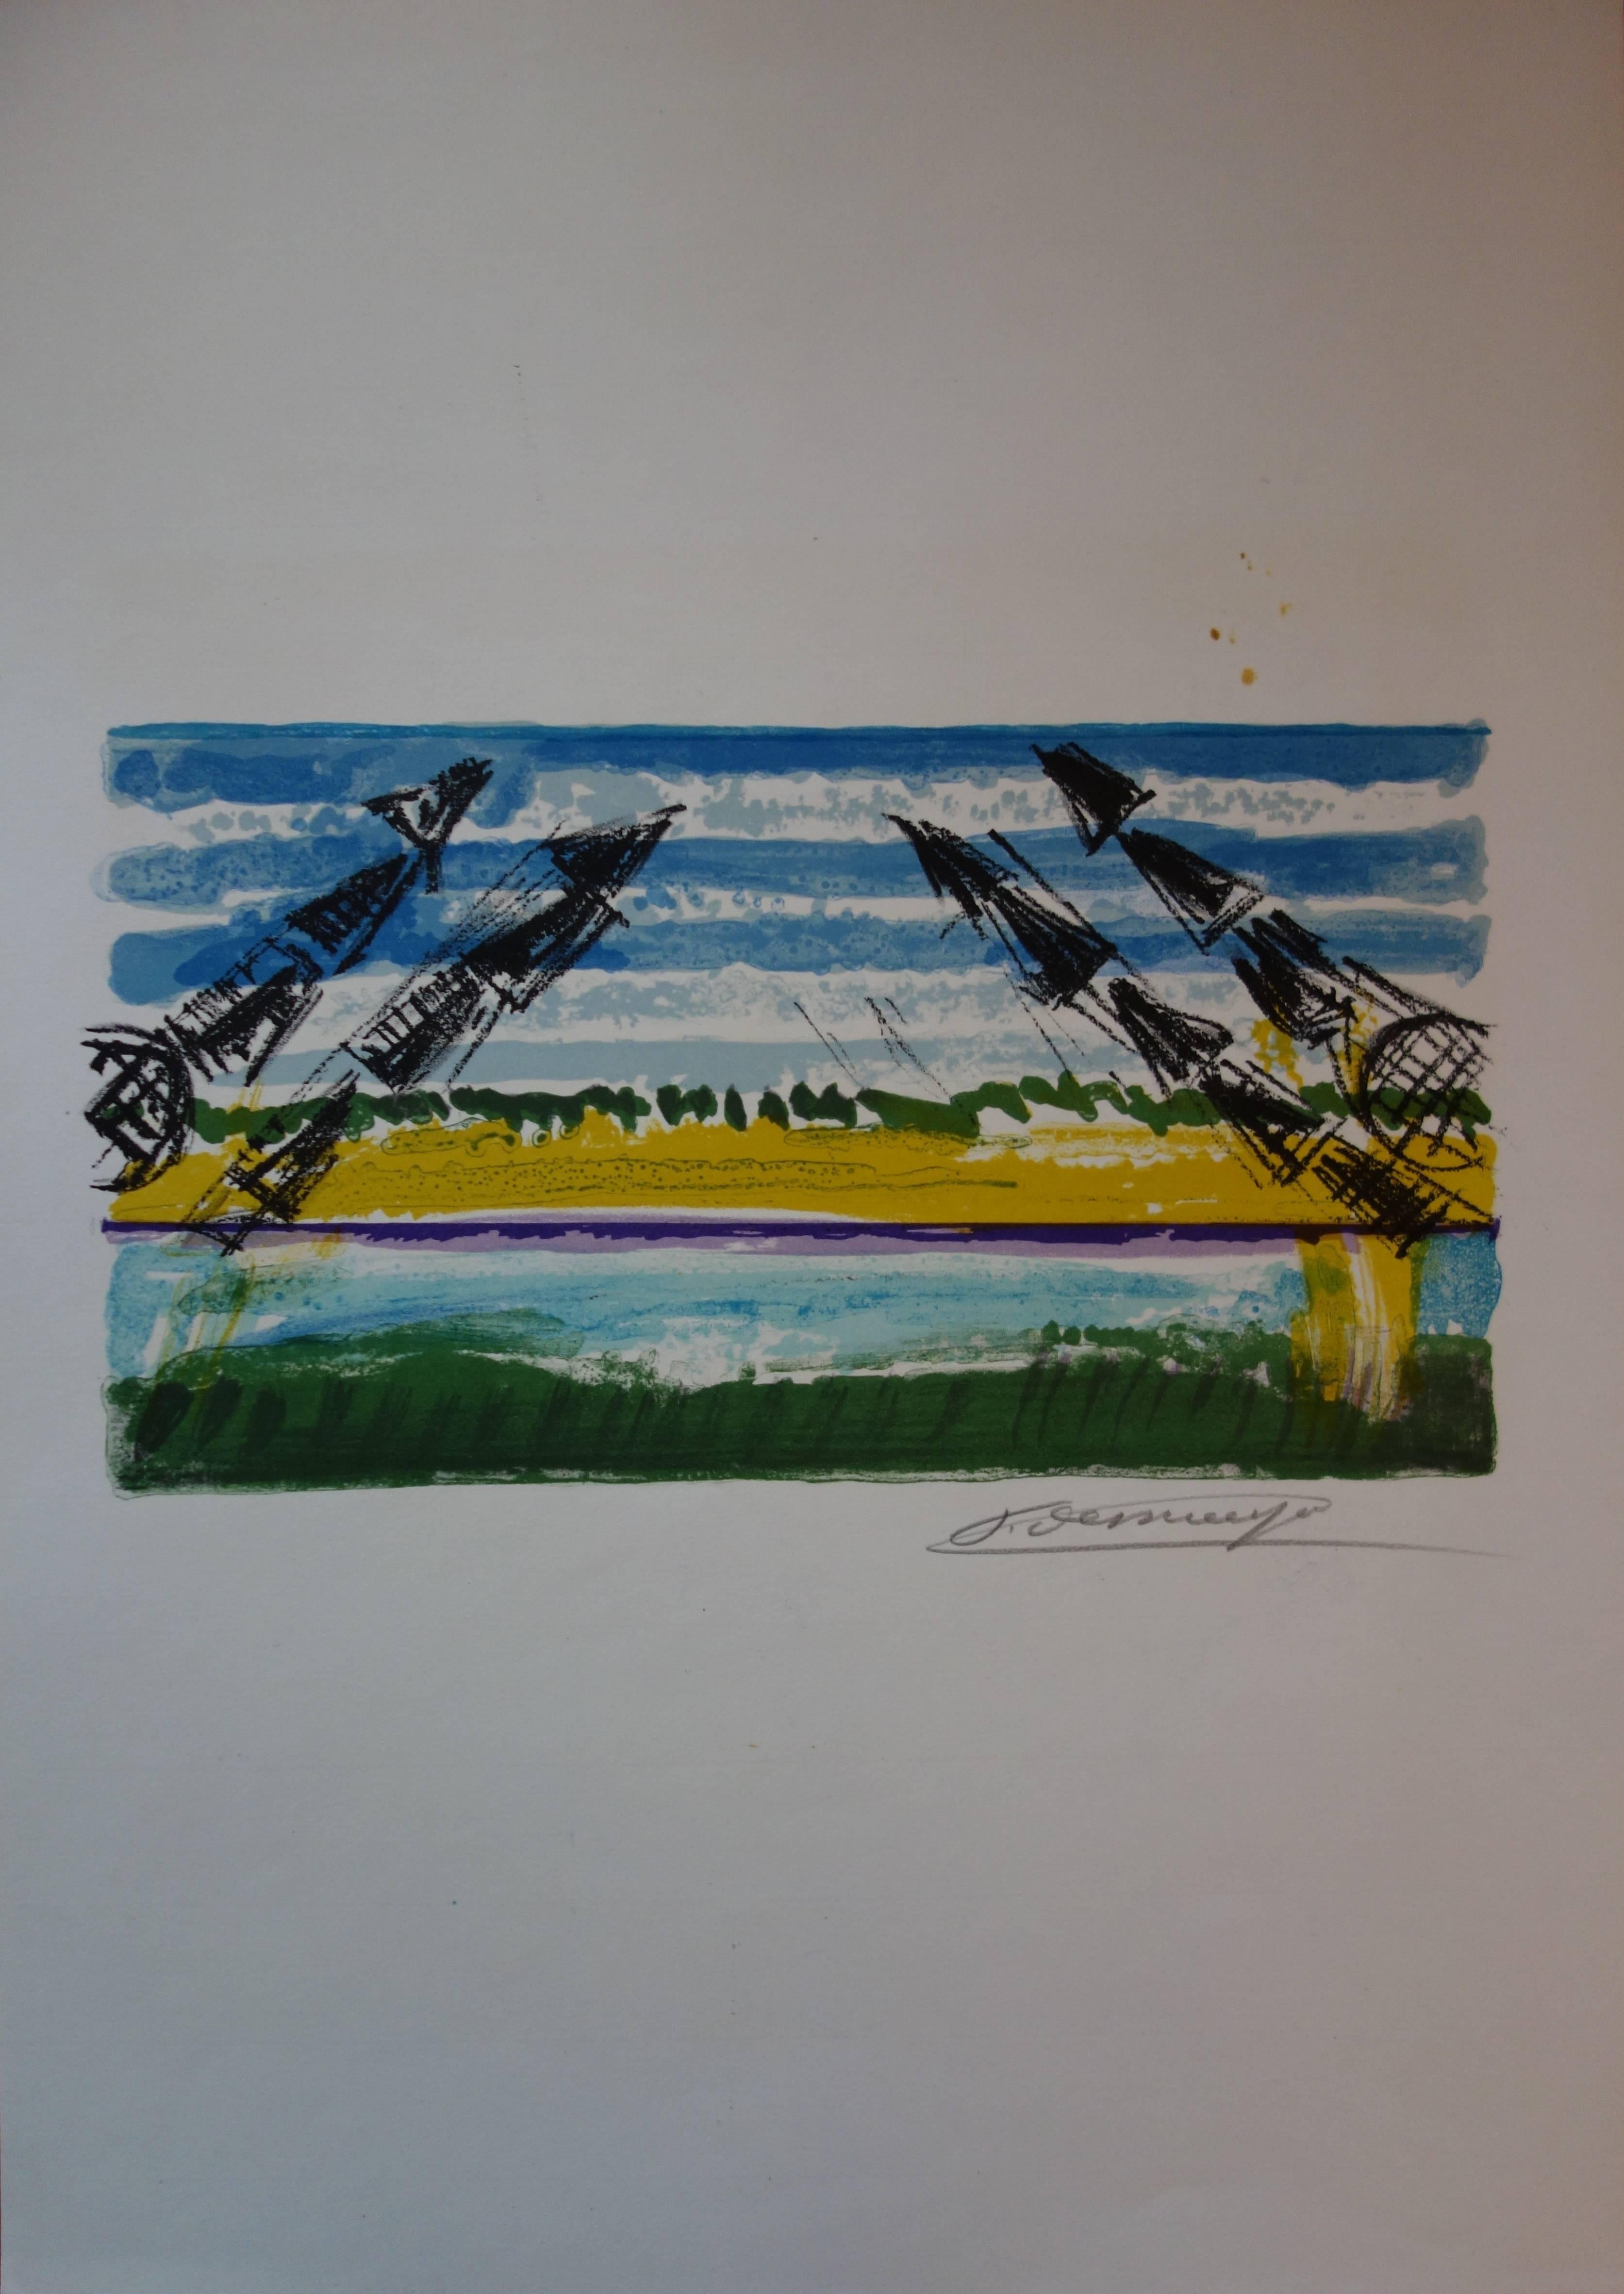 The Cranes - Original handsigned lithograph - Post-Impressionist Print by François Desnoyer